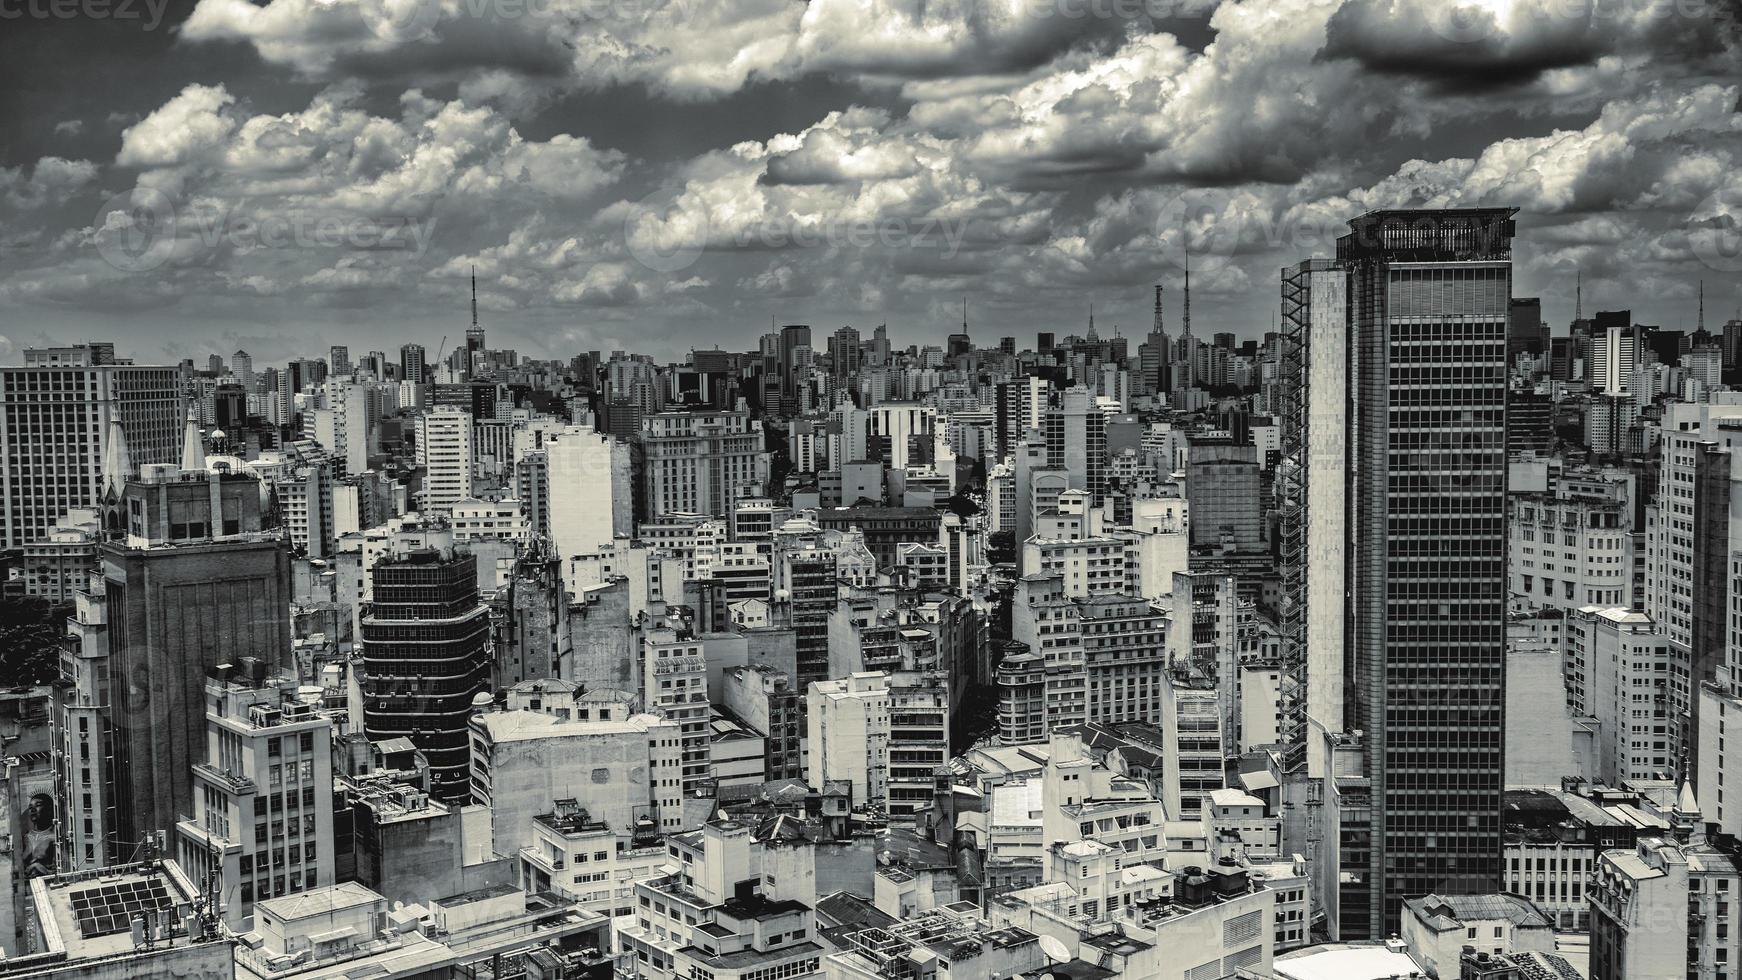 Skyline of Sao Paulo Brazil, taken from the Farol Satander building. photo